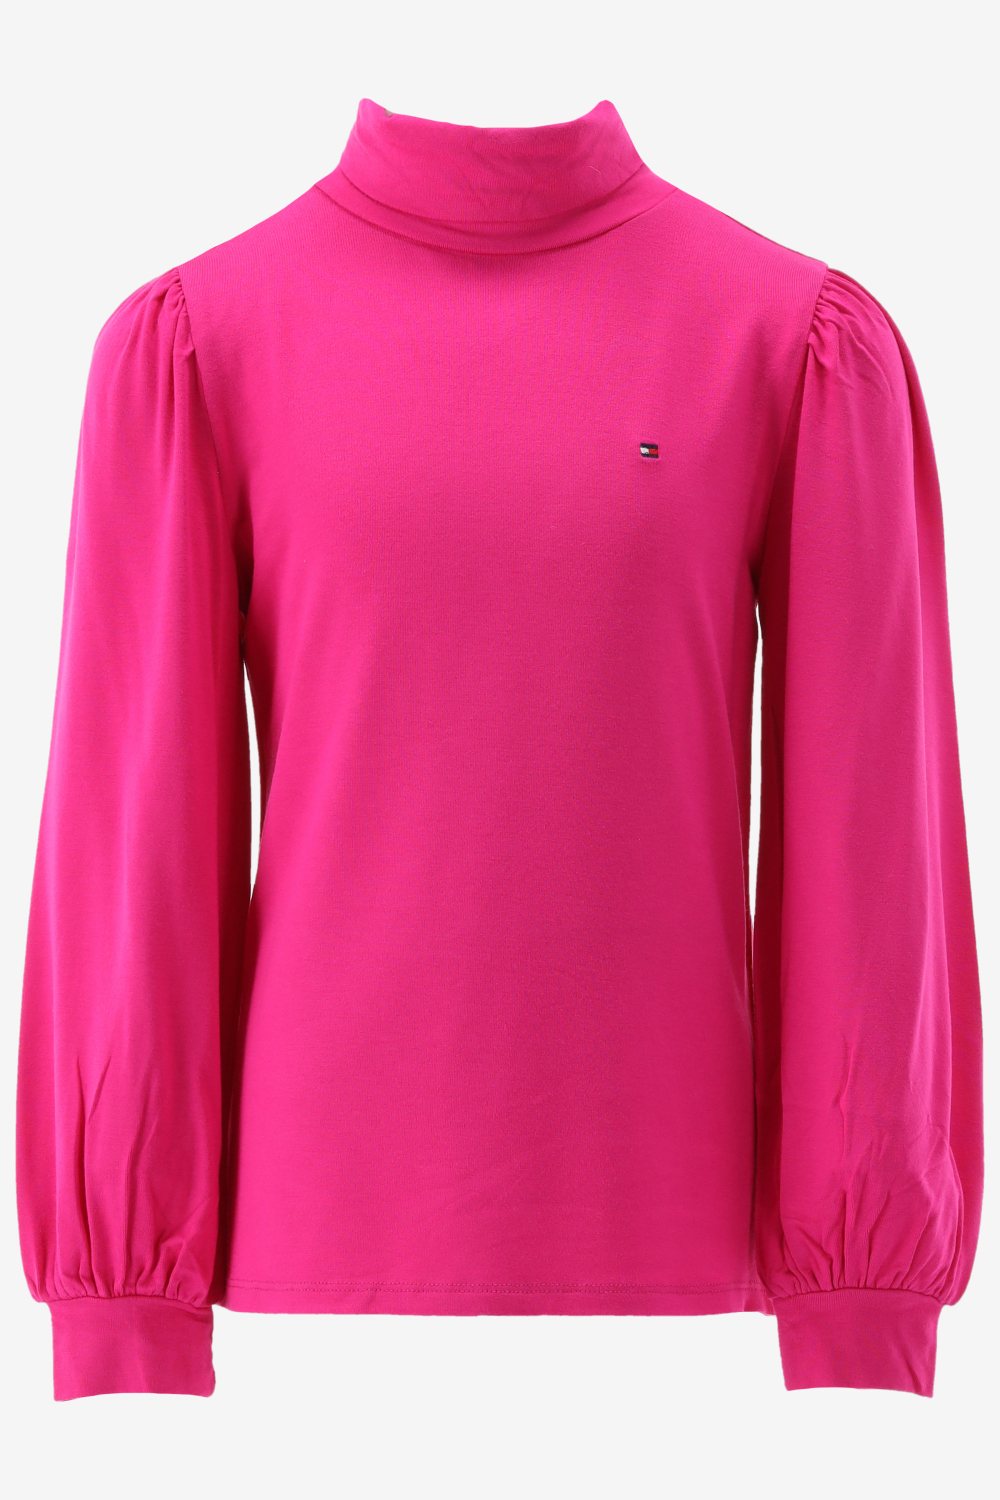 Tommy Hilfiger Turtle Neck Knit Top L/s Tops & T-shirts - Fuchsia